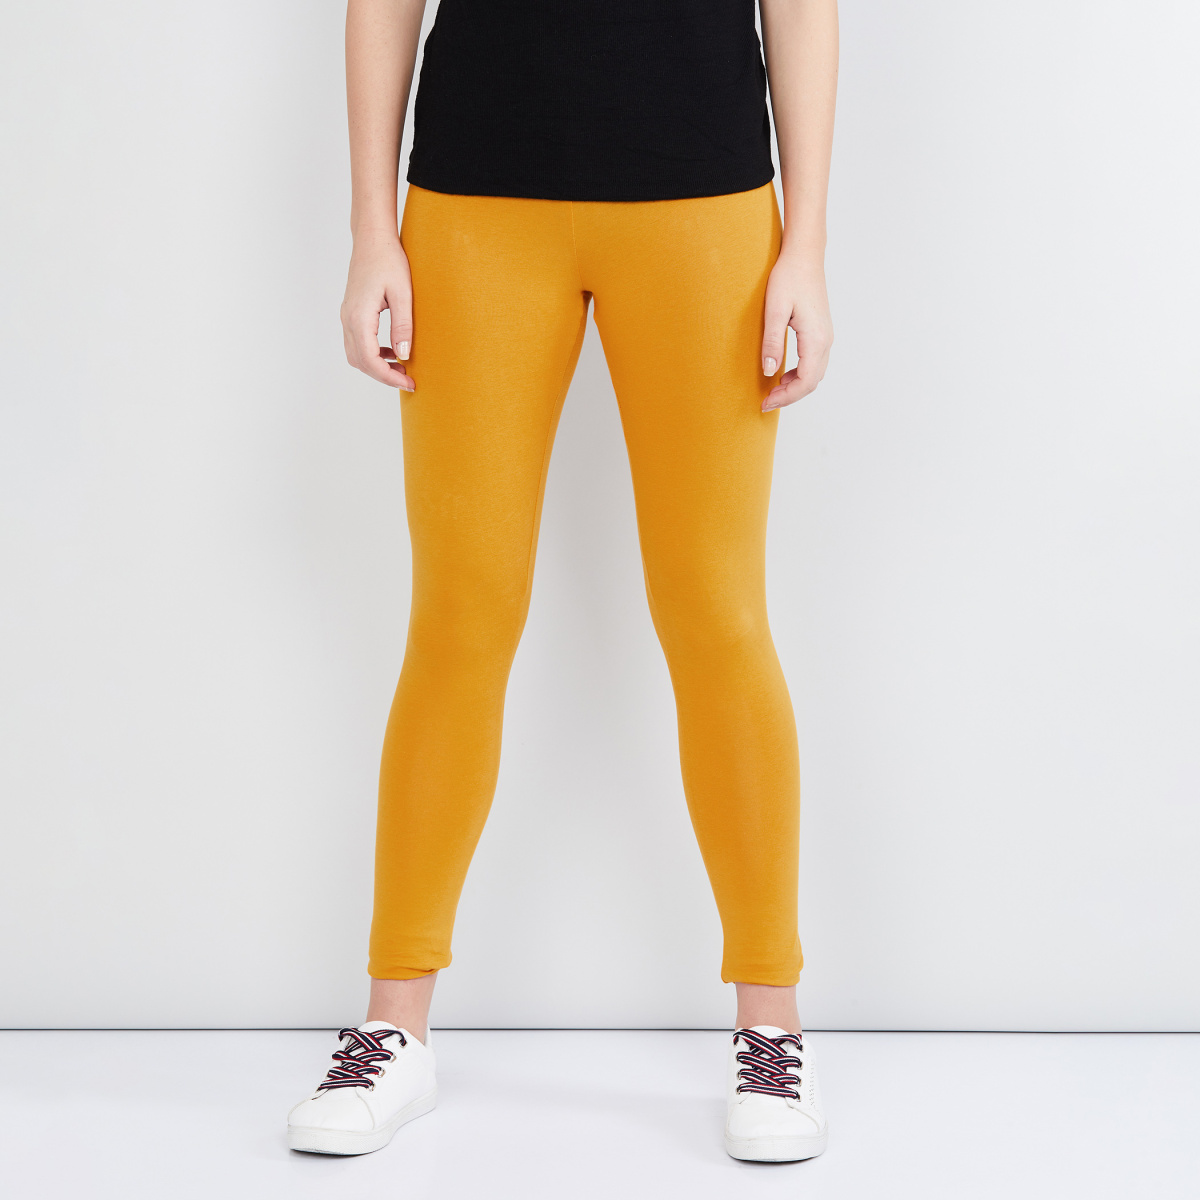 Top more than 208 orange ankle length leggings latest